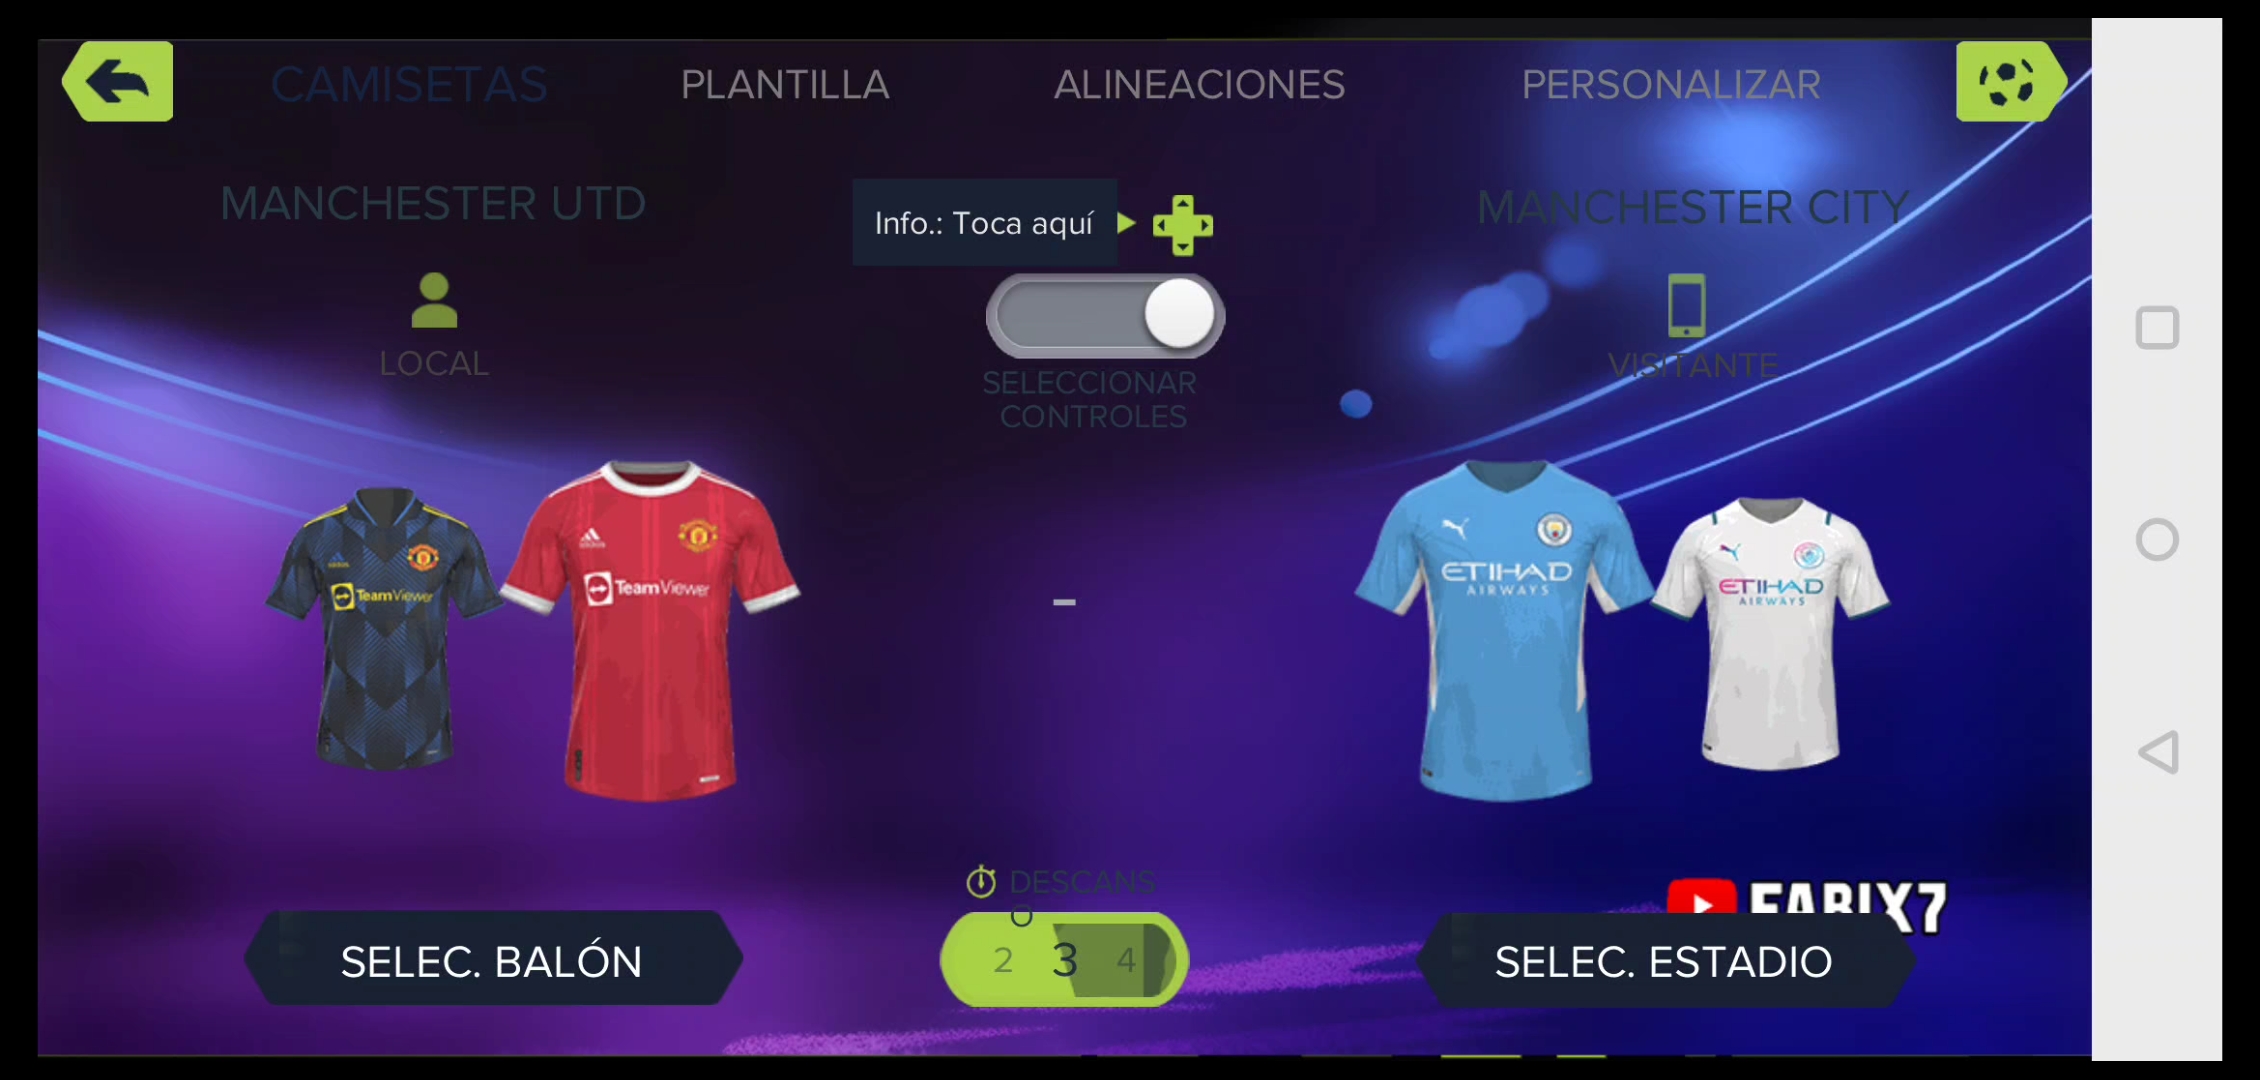 FIFA 22 APK OBB Original Download For Android Offline – Appogames :  u/appogames123